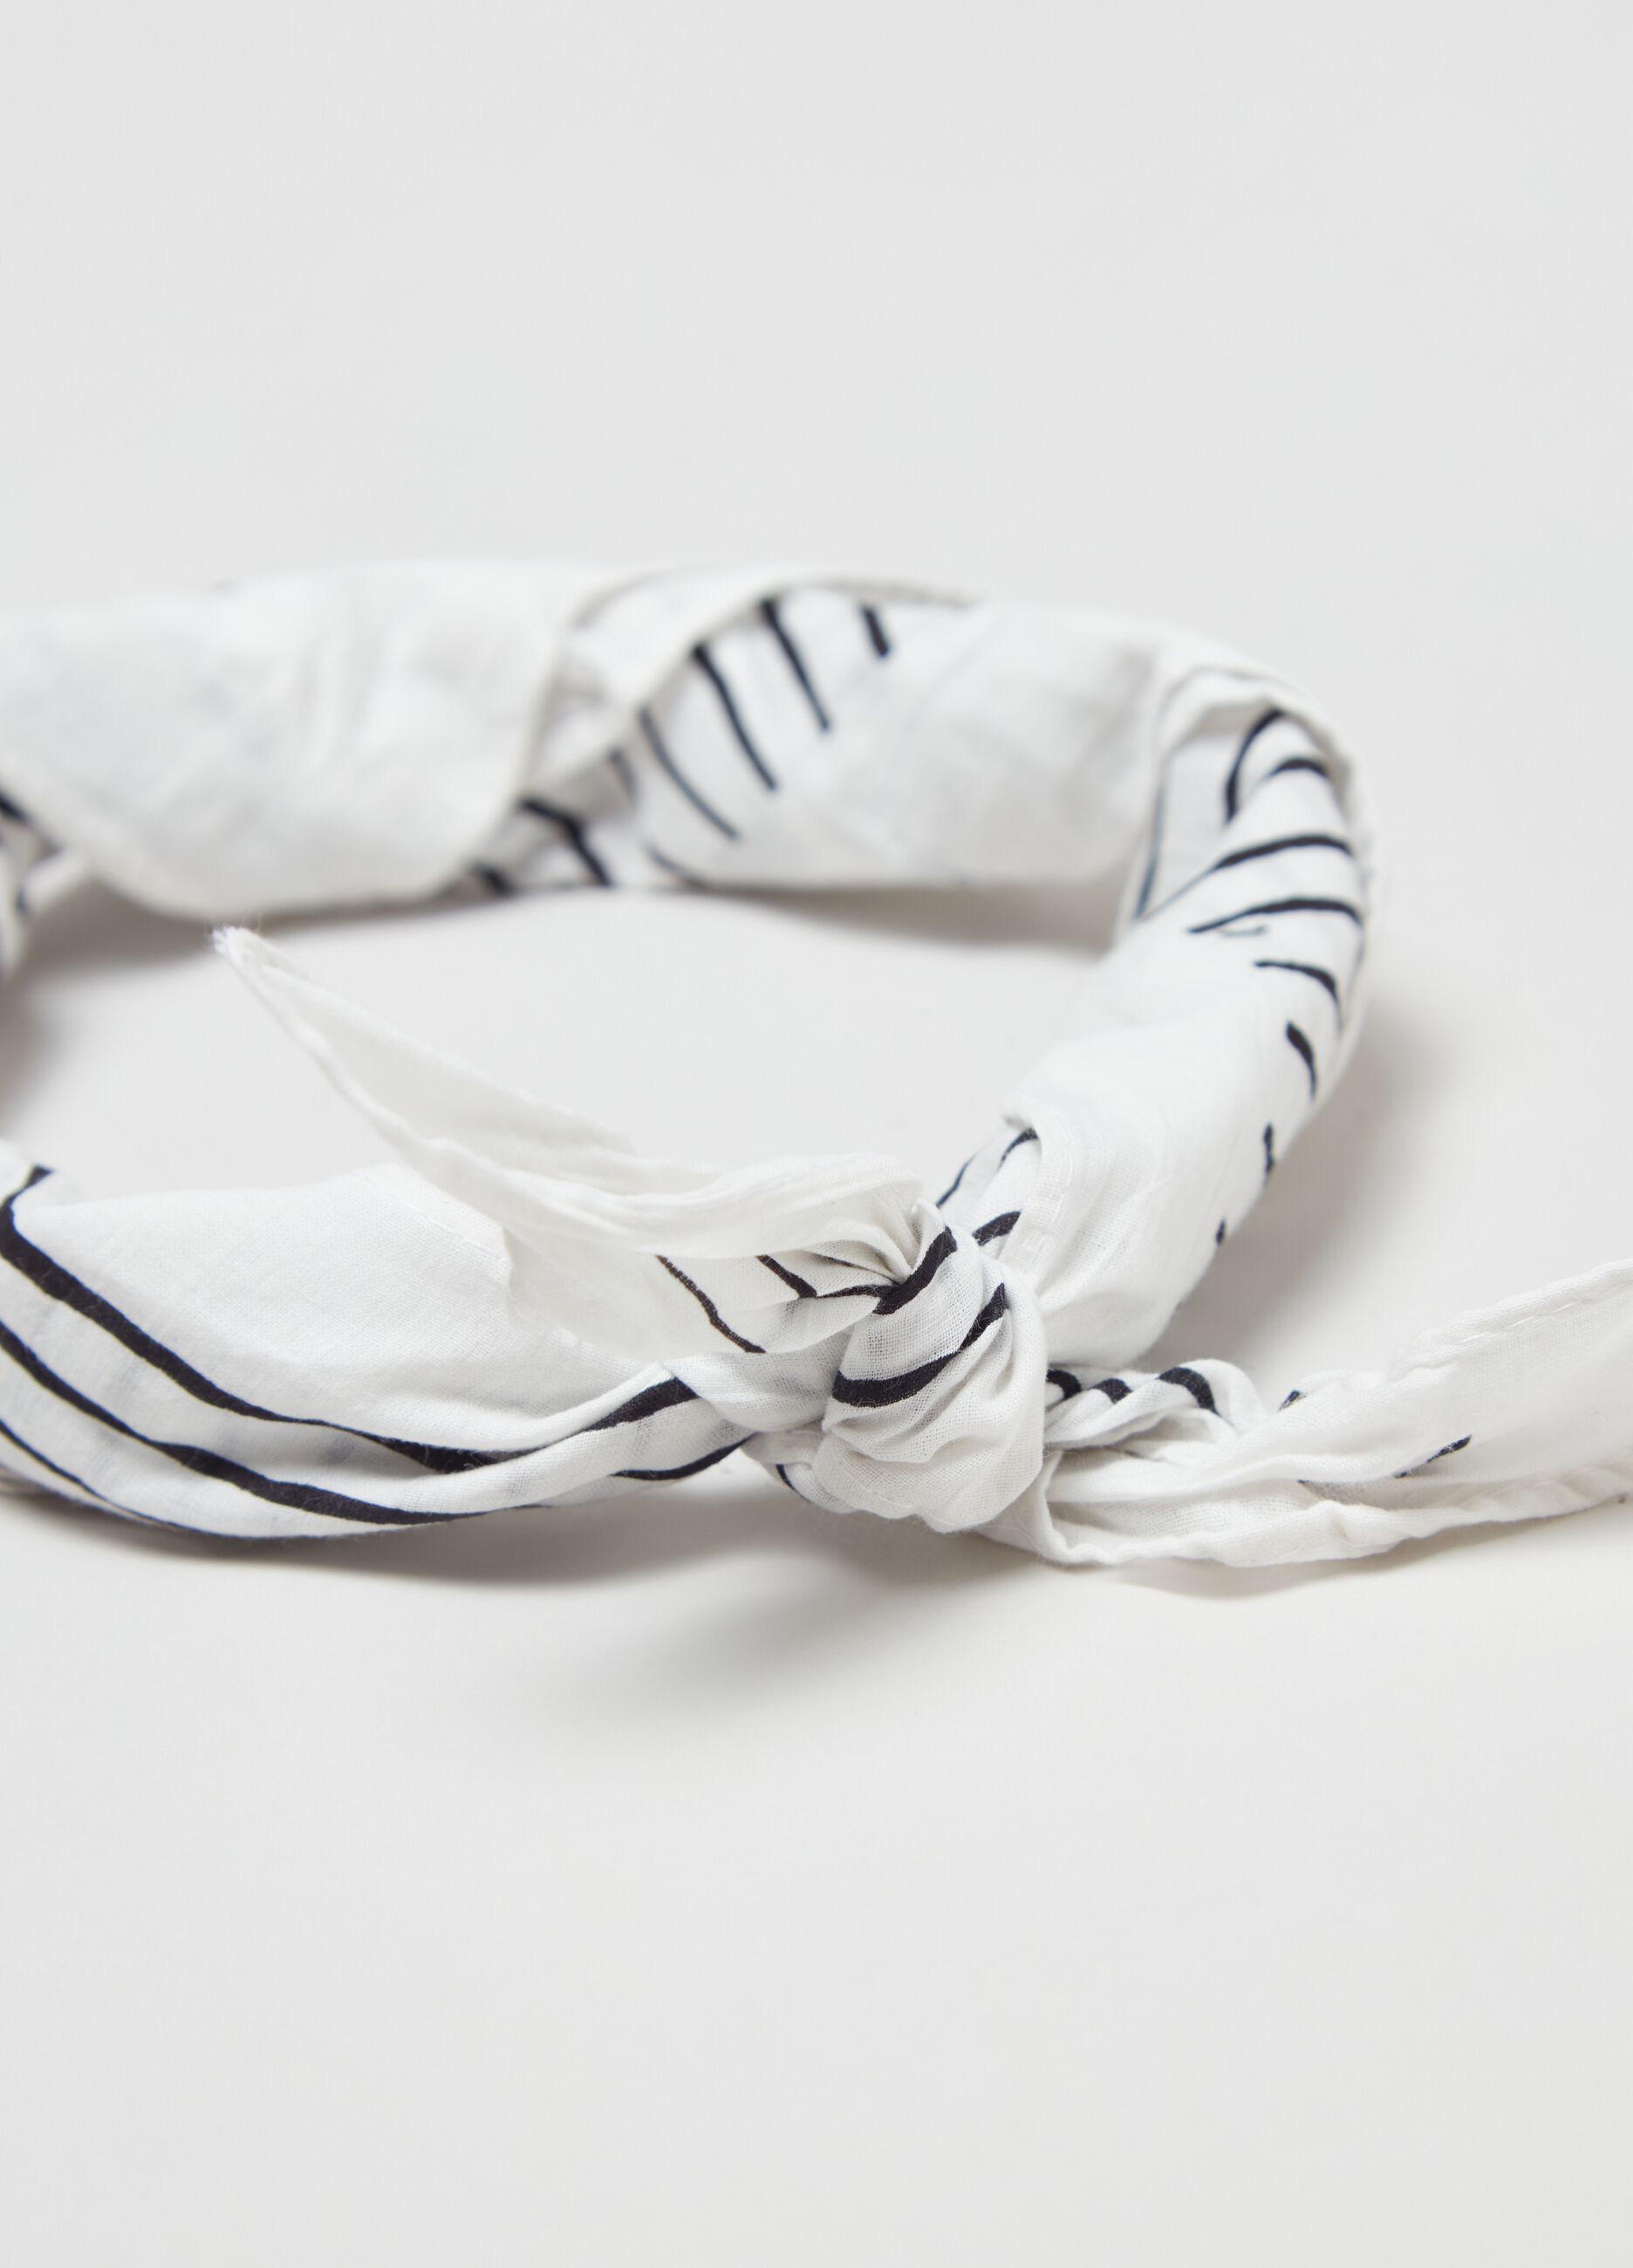 Cotton bandana with print